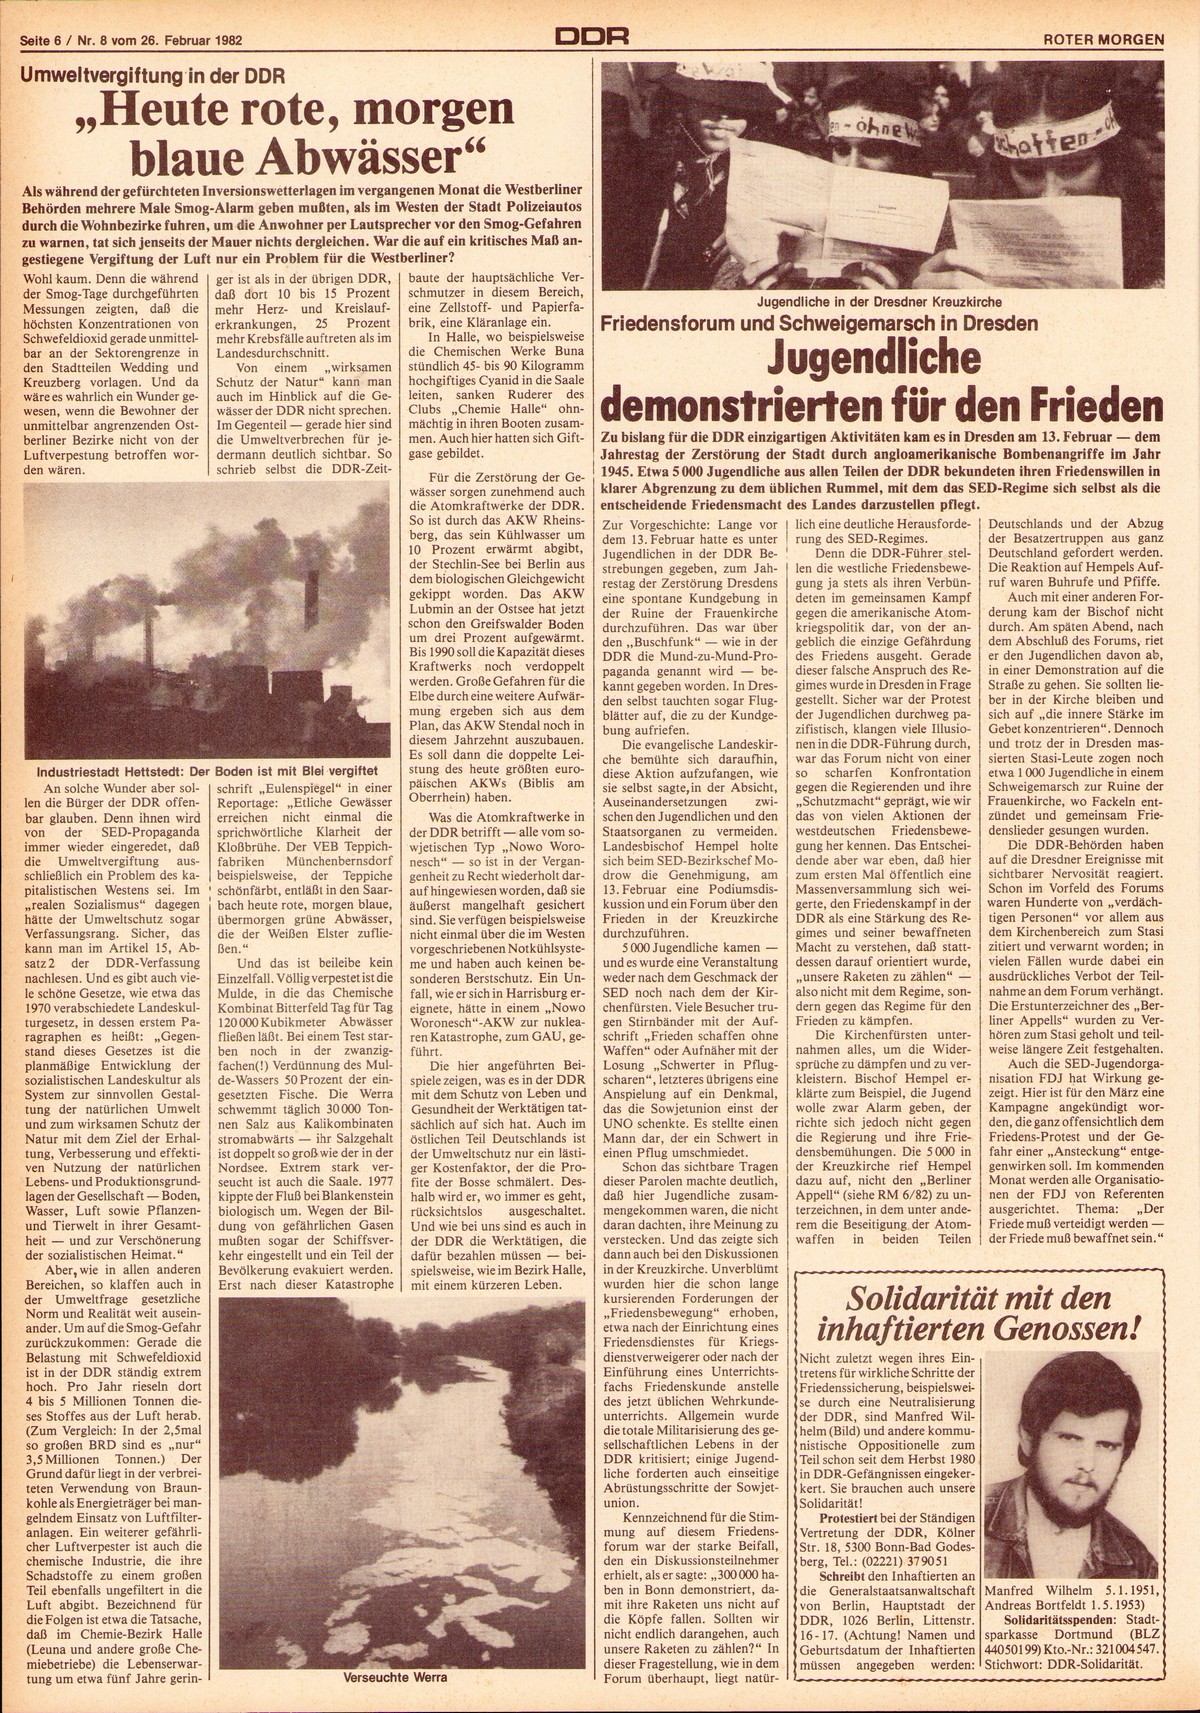 Roter Morgen, 16. Jg., 26. Februar  1982, Nr. 8, Seite 6